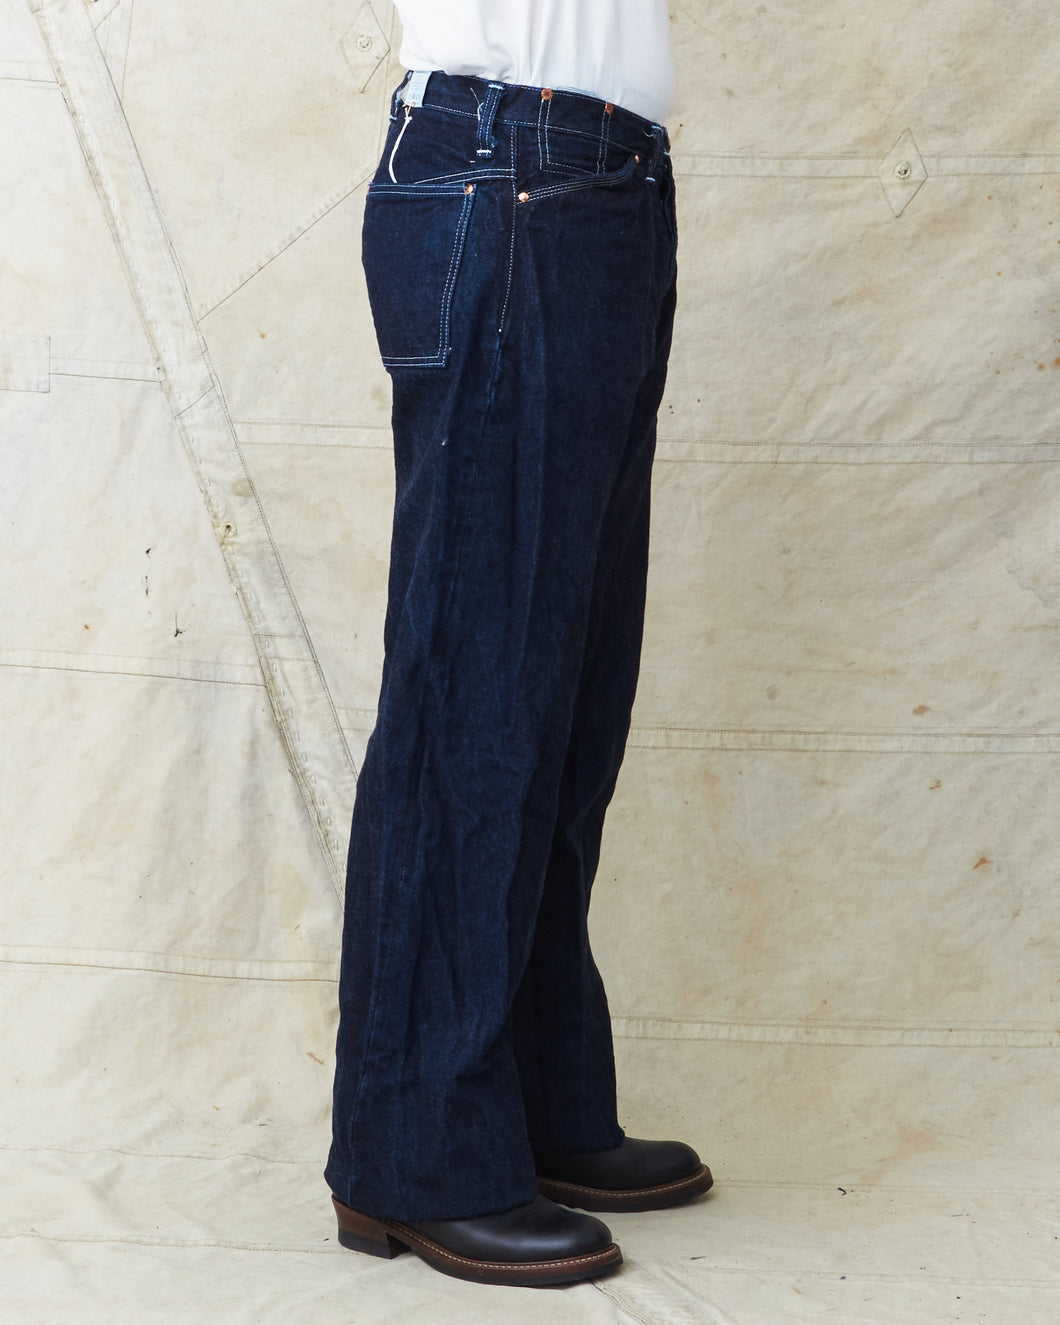 Tender Type 136 Oxford Jeans 16 oz Rinsed Selvage Denim – Second